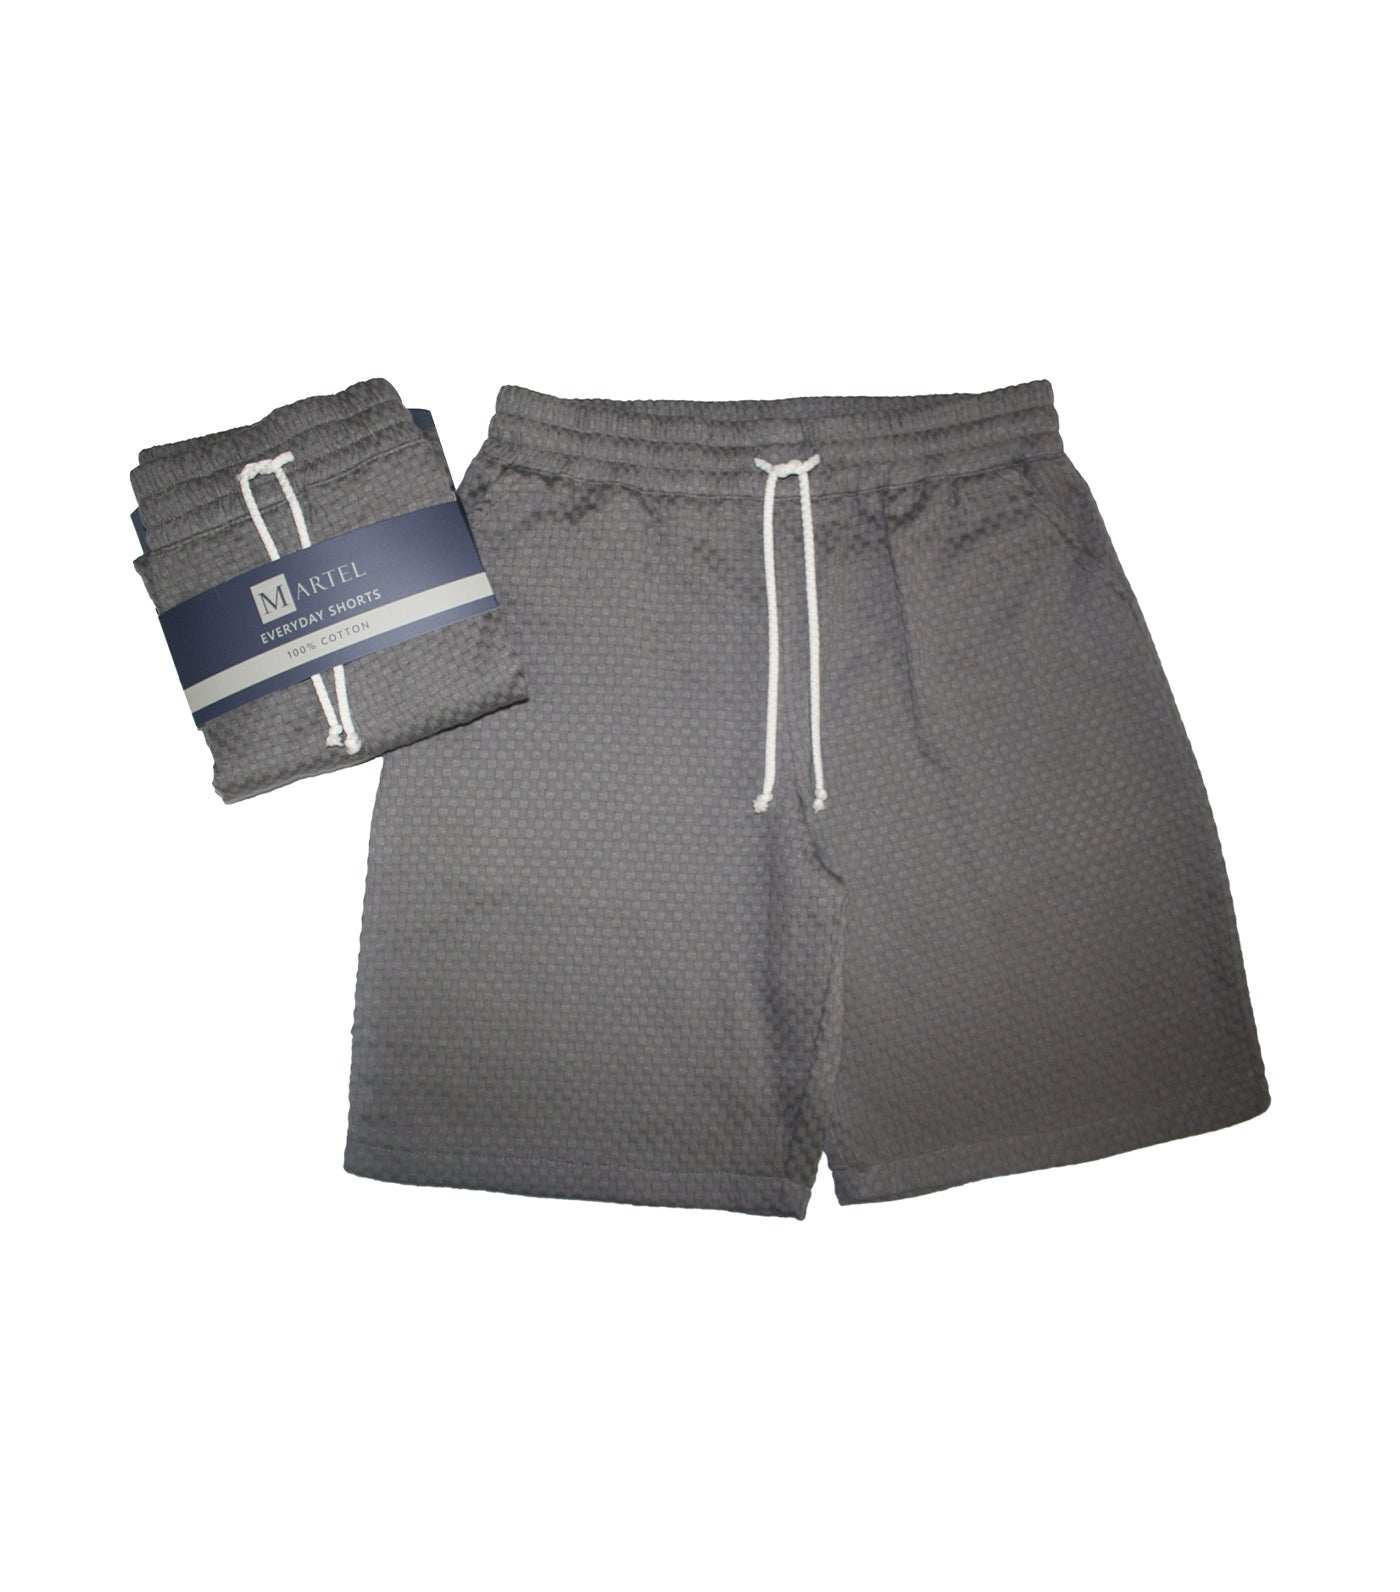 Martel Men's Lounge Shorts - Cold Gray